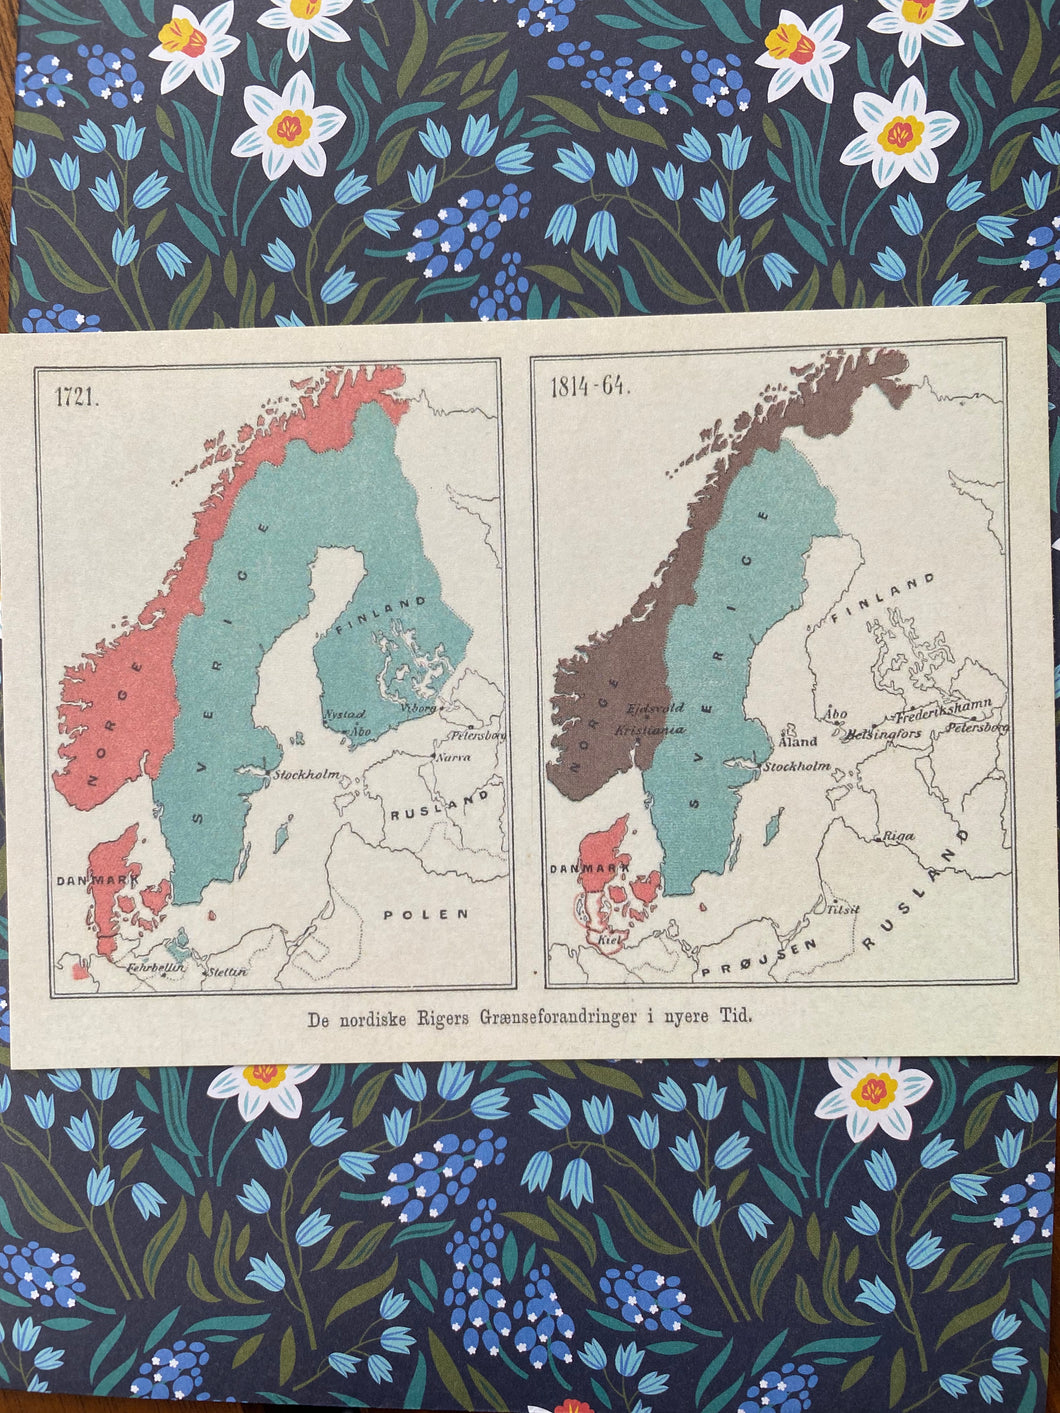 Old map of Scandinavia postcard